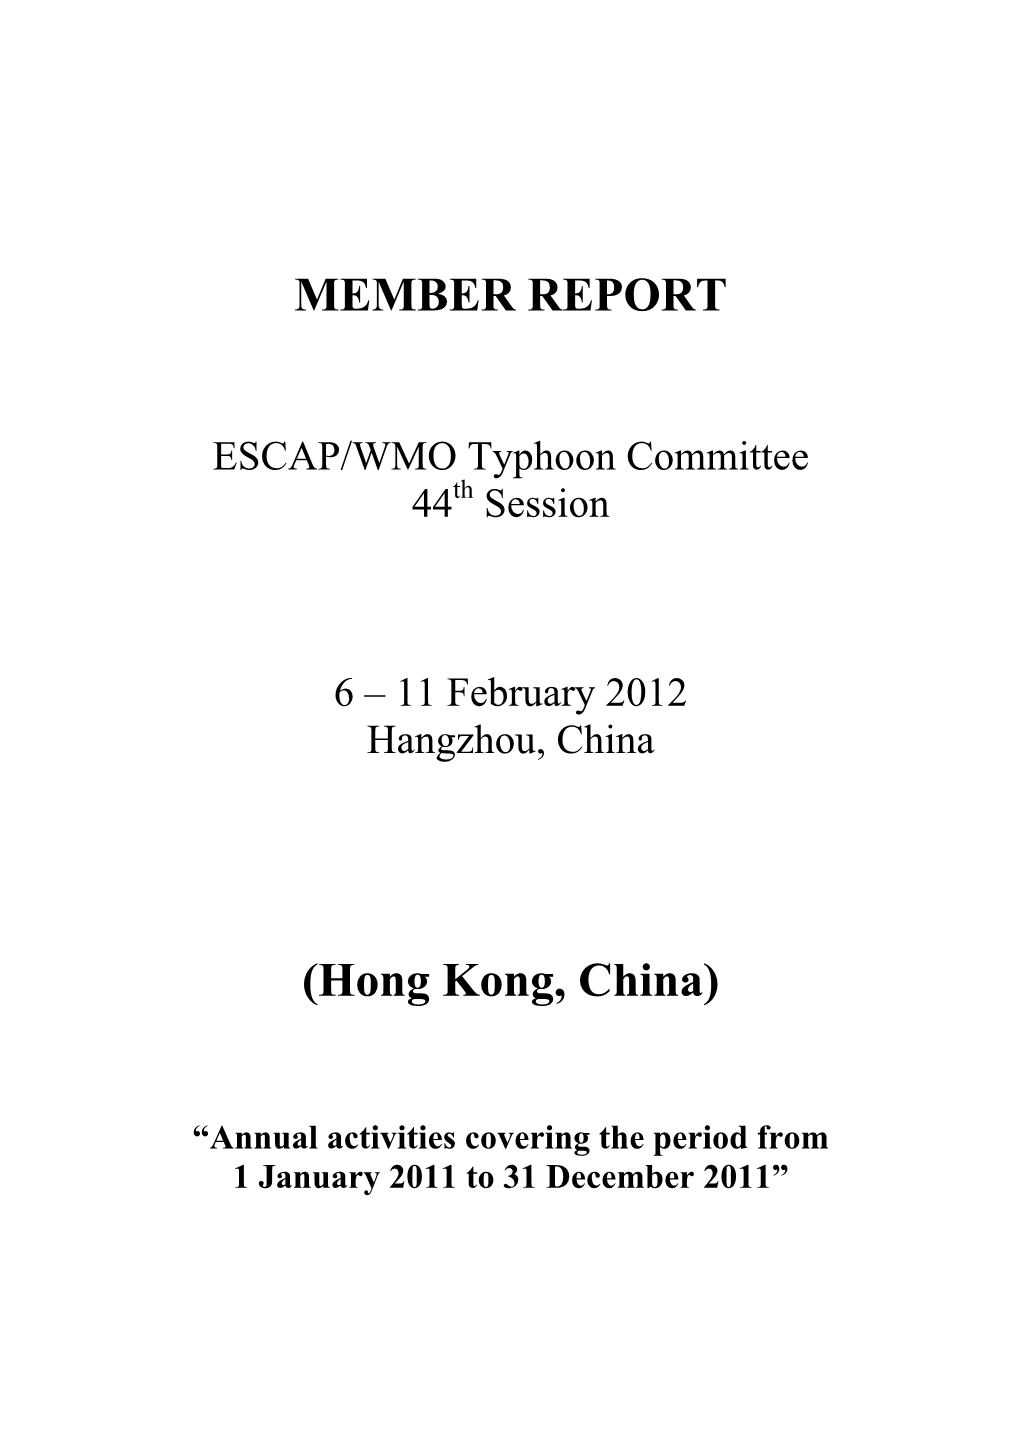 MEMBER REPORT (Hong Kong, China)